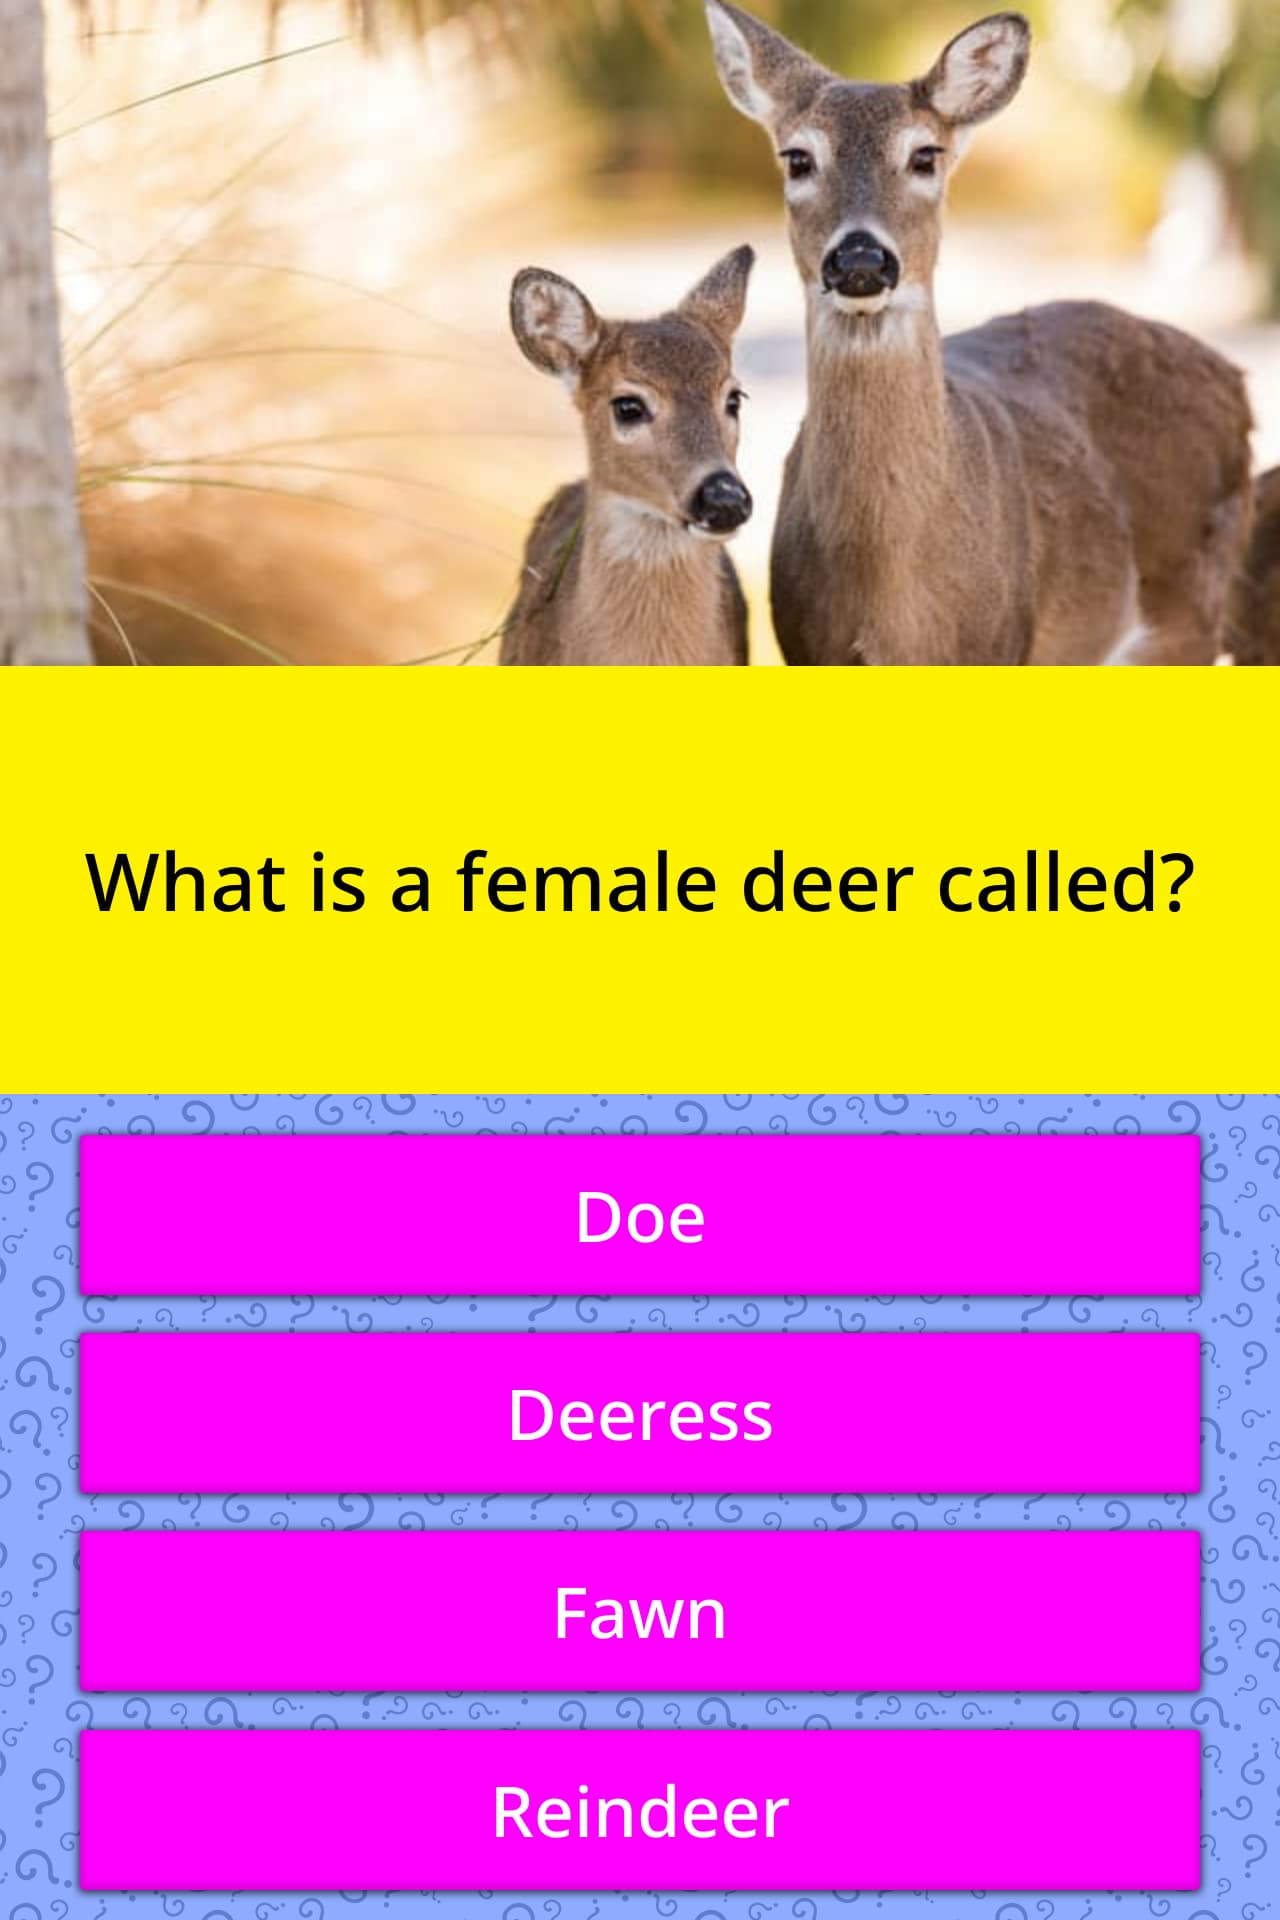 What do you call a female deer?